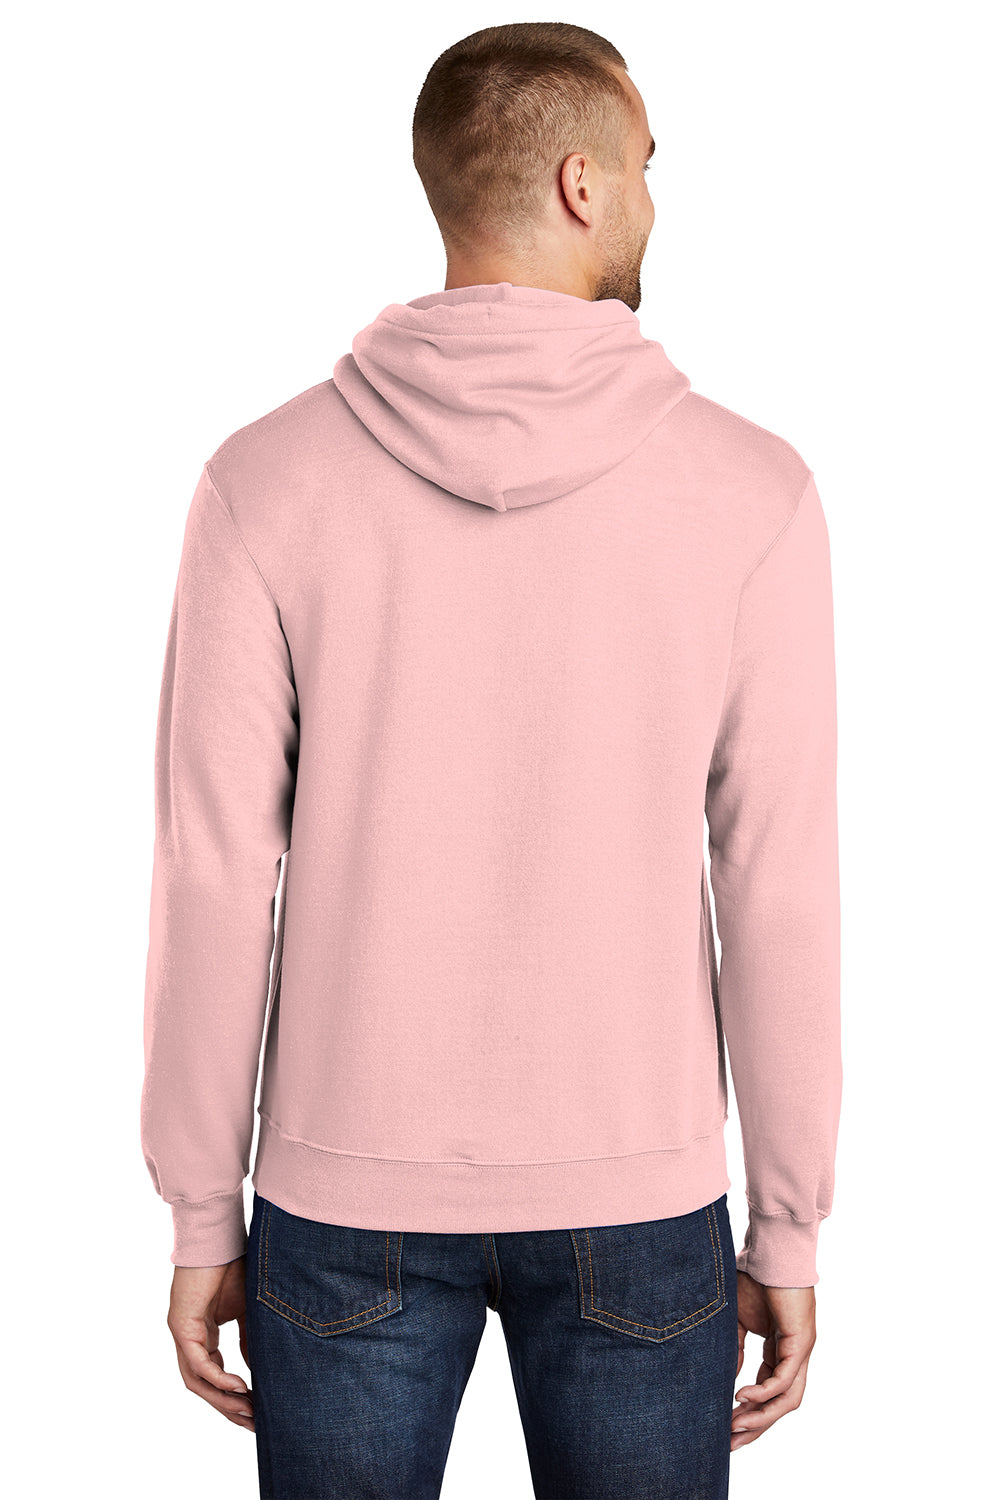 Port & Company PC78H/PC78HT Mens Core Fleece Hooded Sweatshirt Hoodie Pale Blush Pink Back